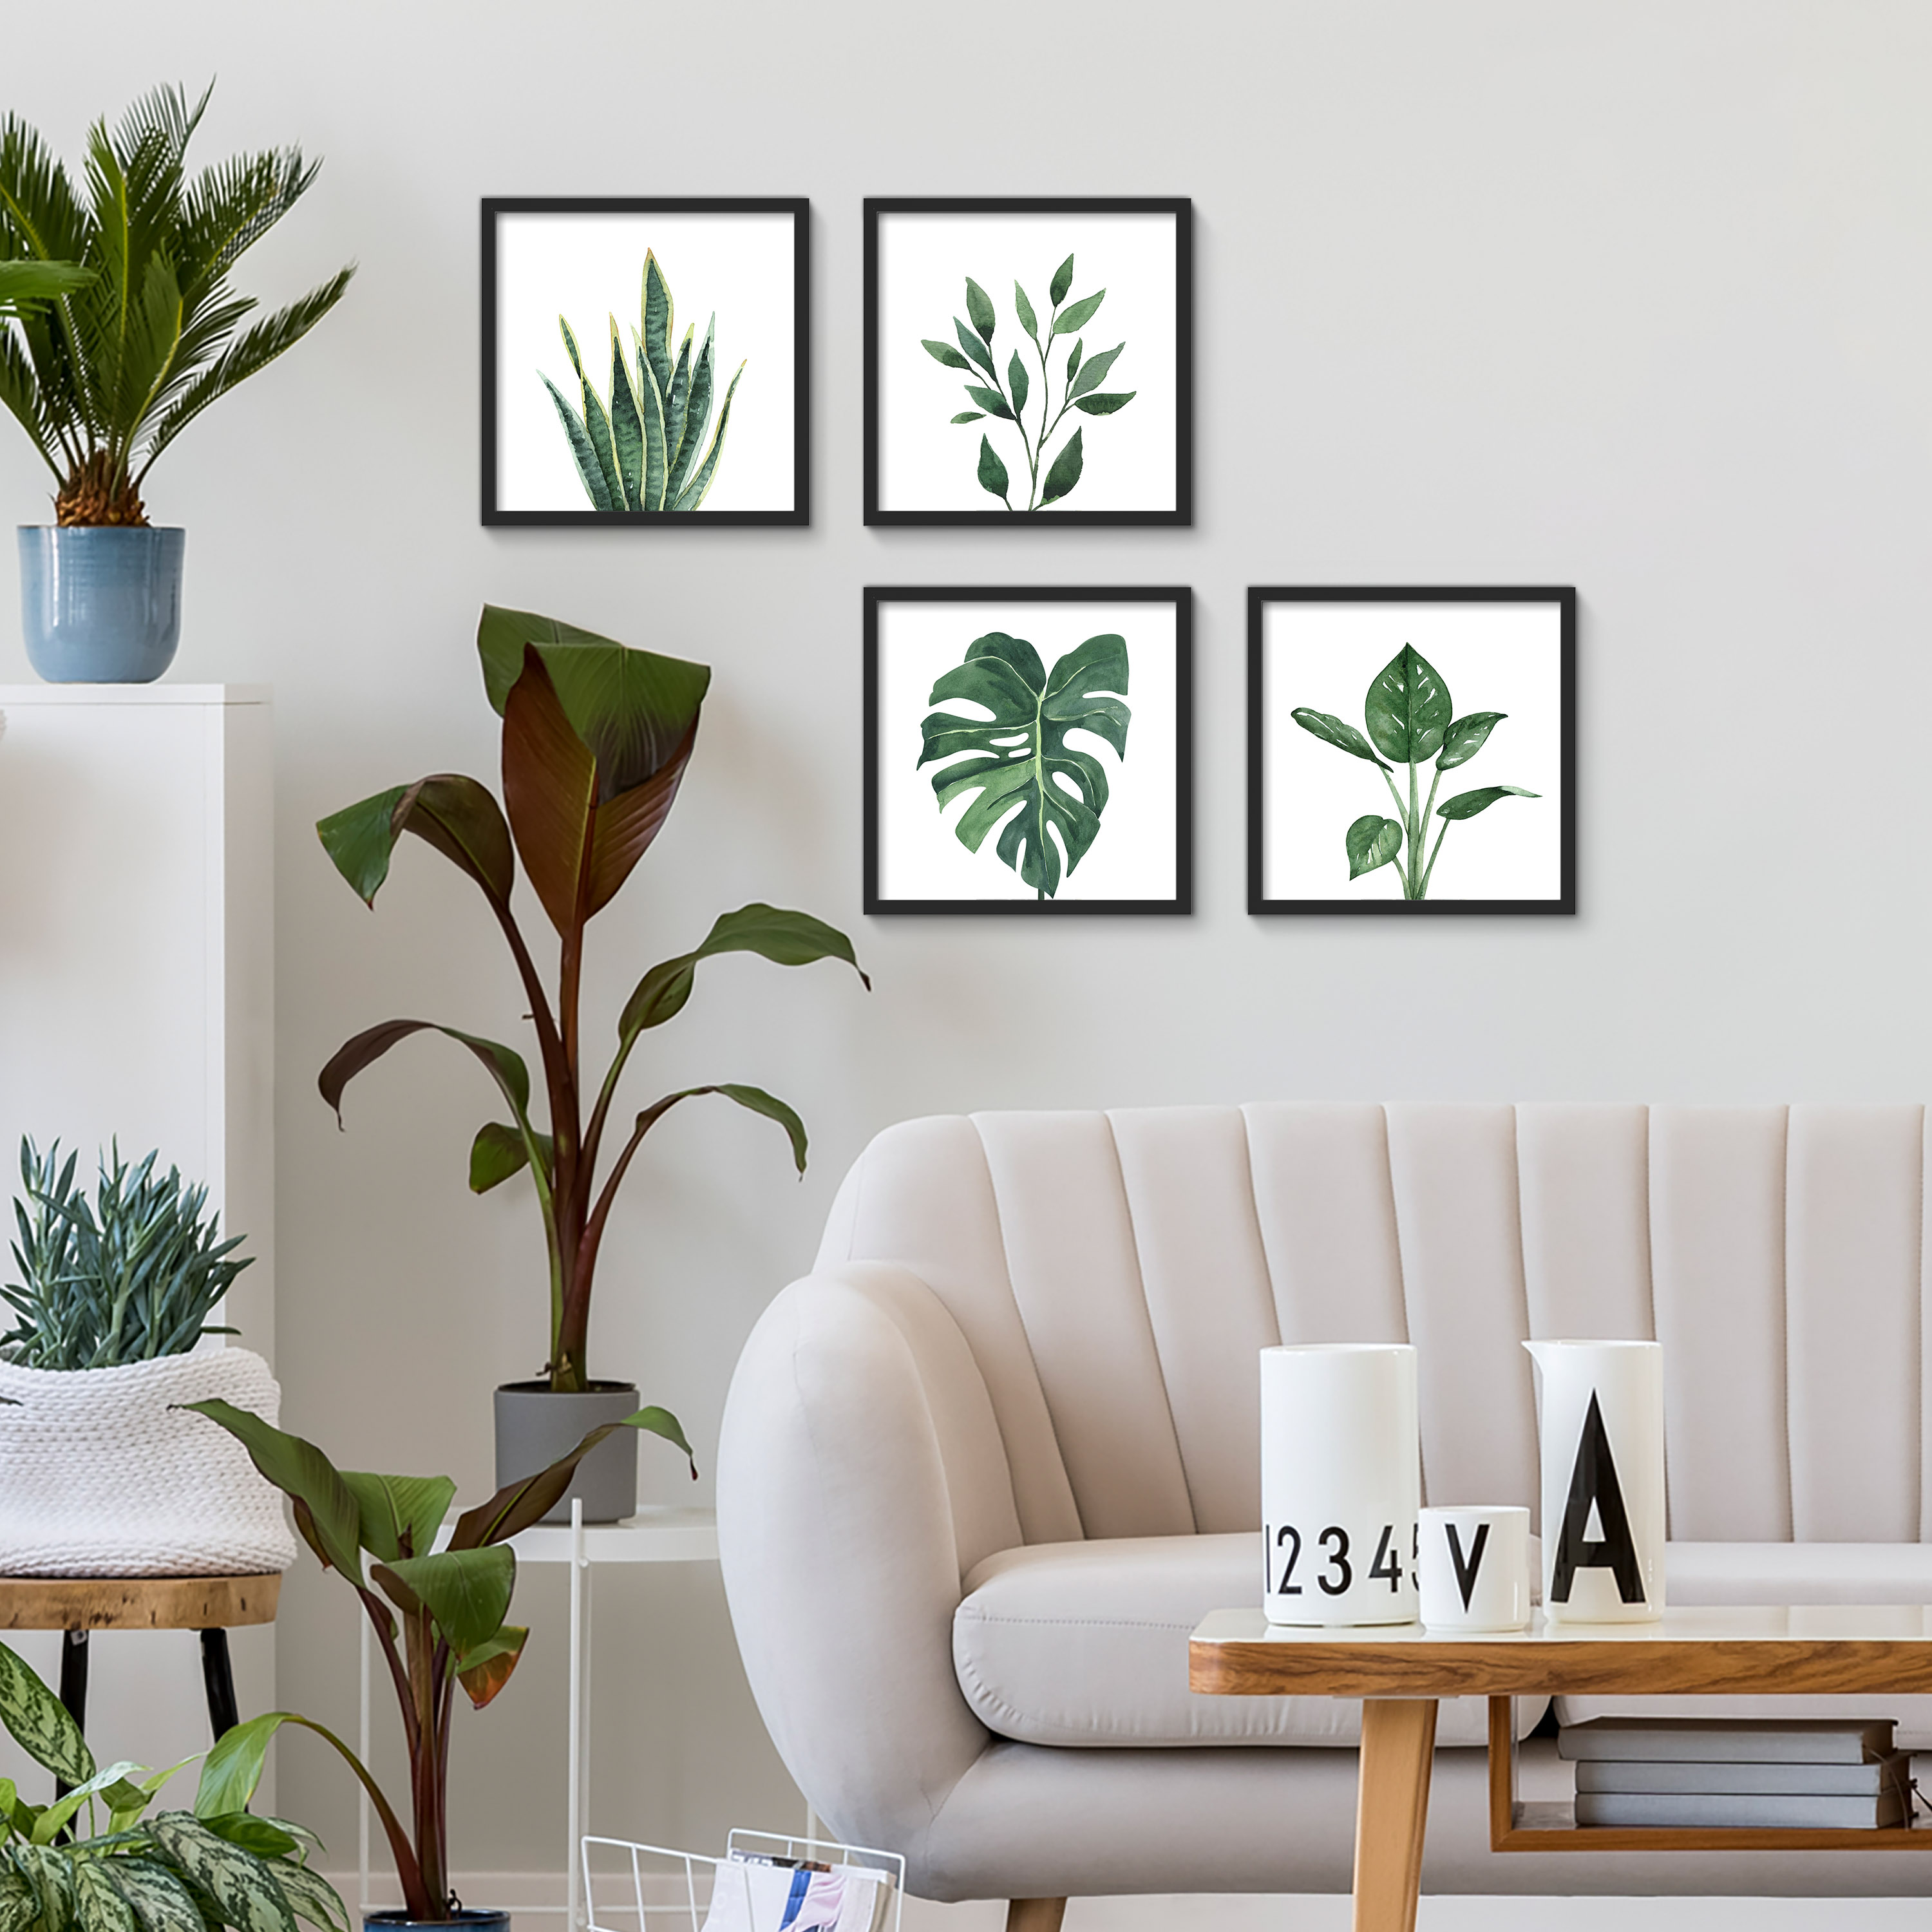 ArtbyHannah 10x10 inch Botanical Framed Wall Art Set with Watercolor Tropical  Plants Art Prints, Set of Black Wall Decor for Bathroom, Living Room 